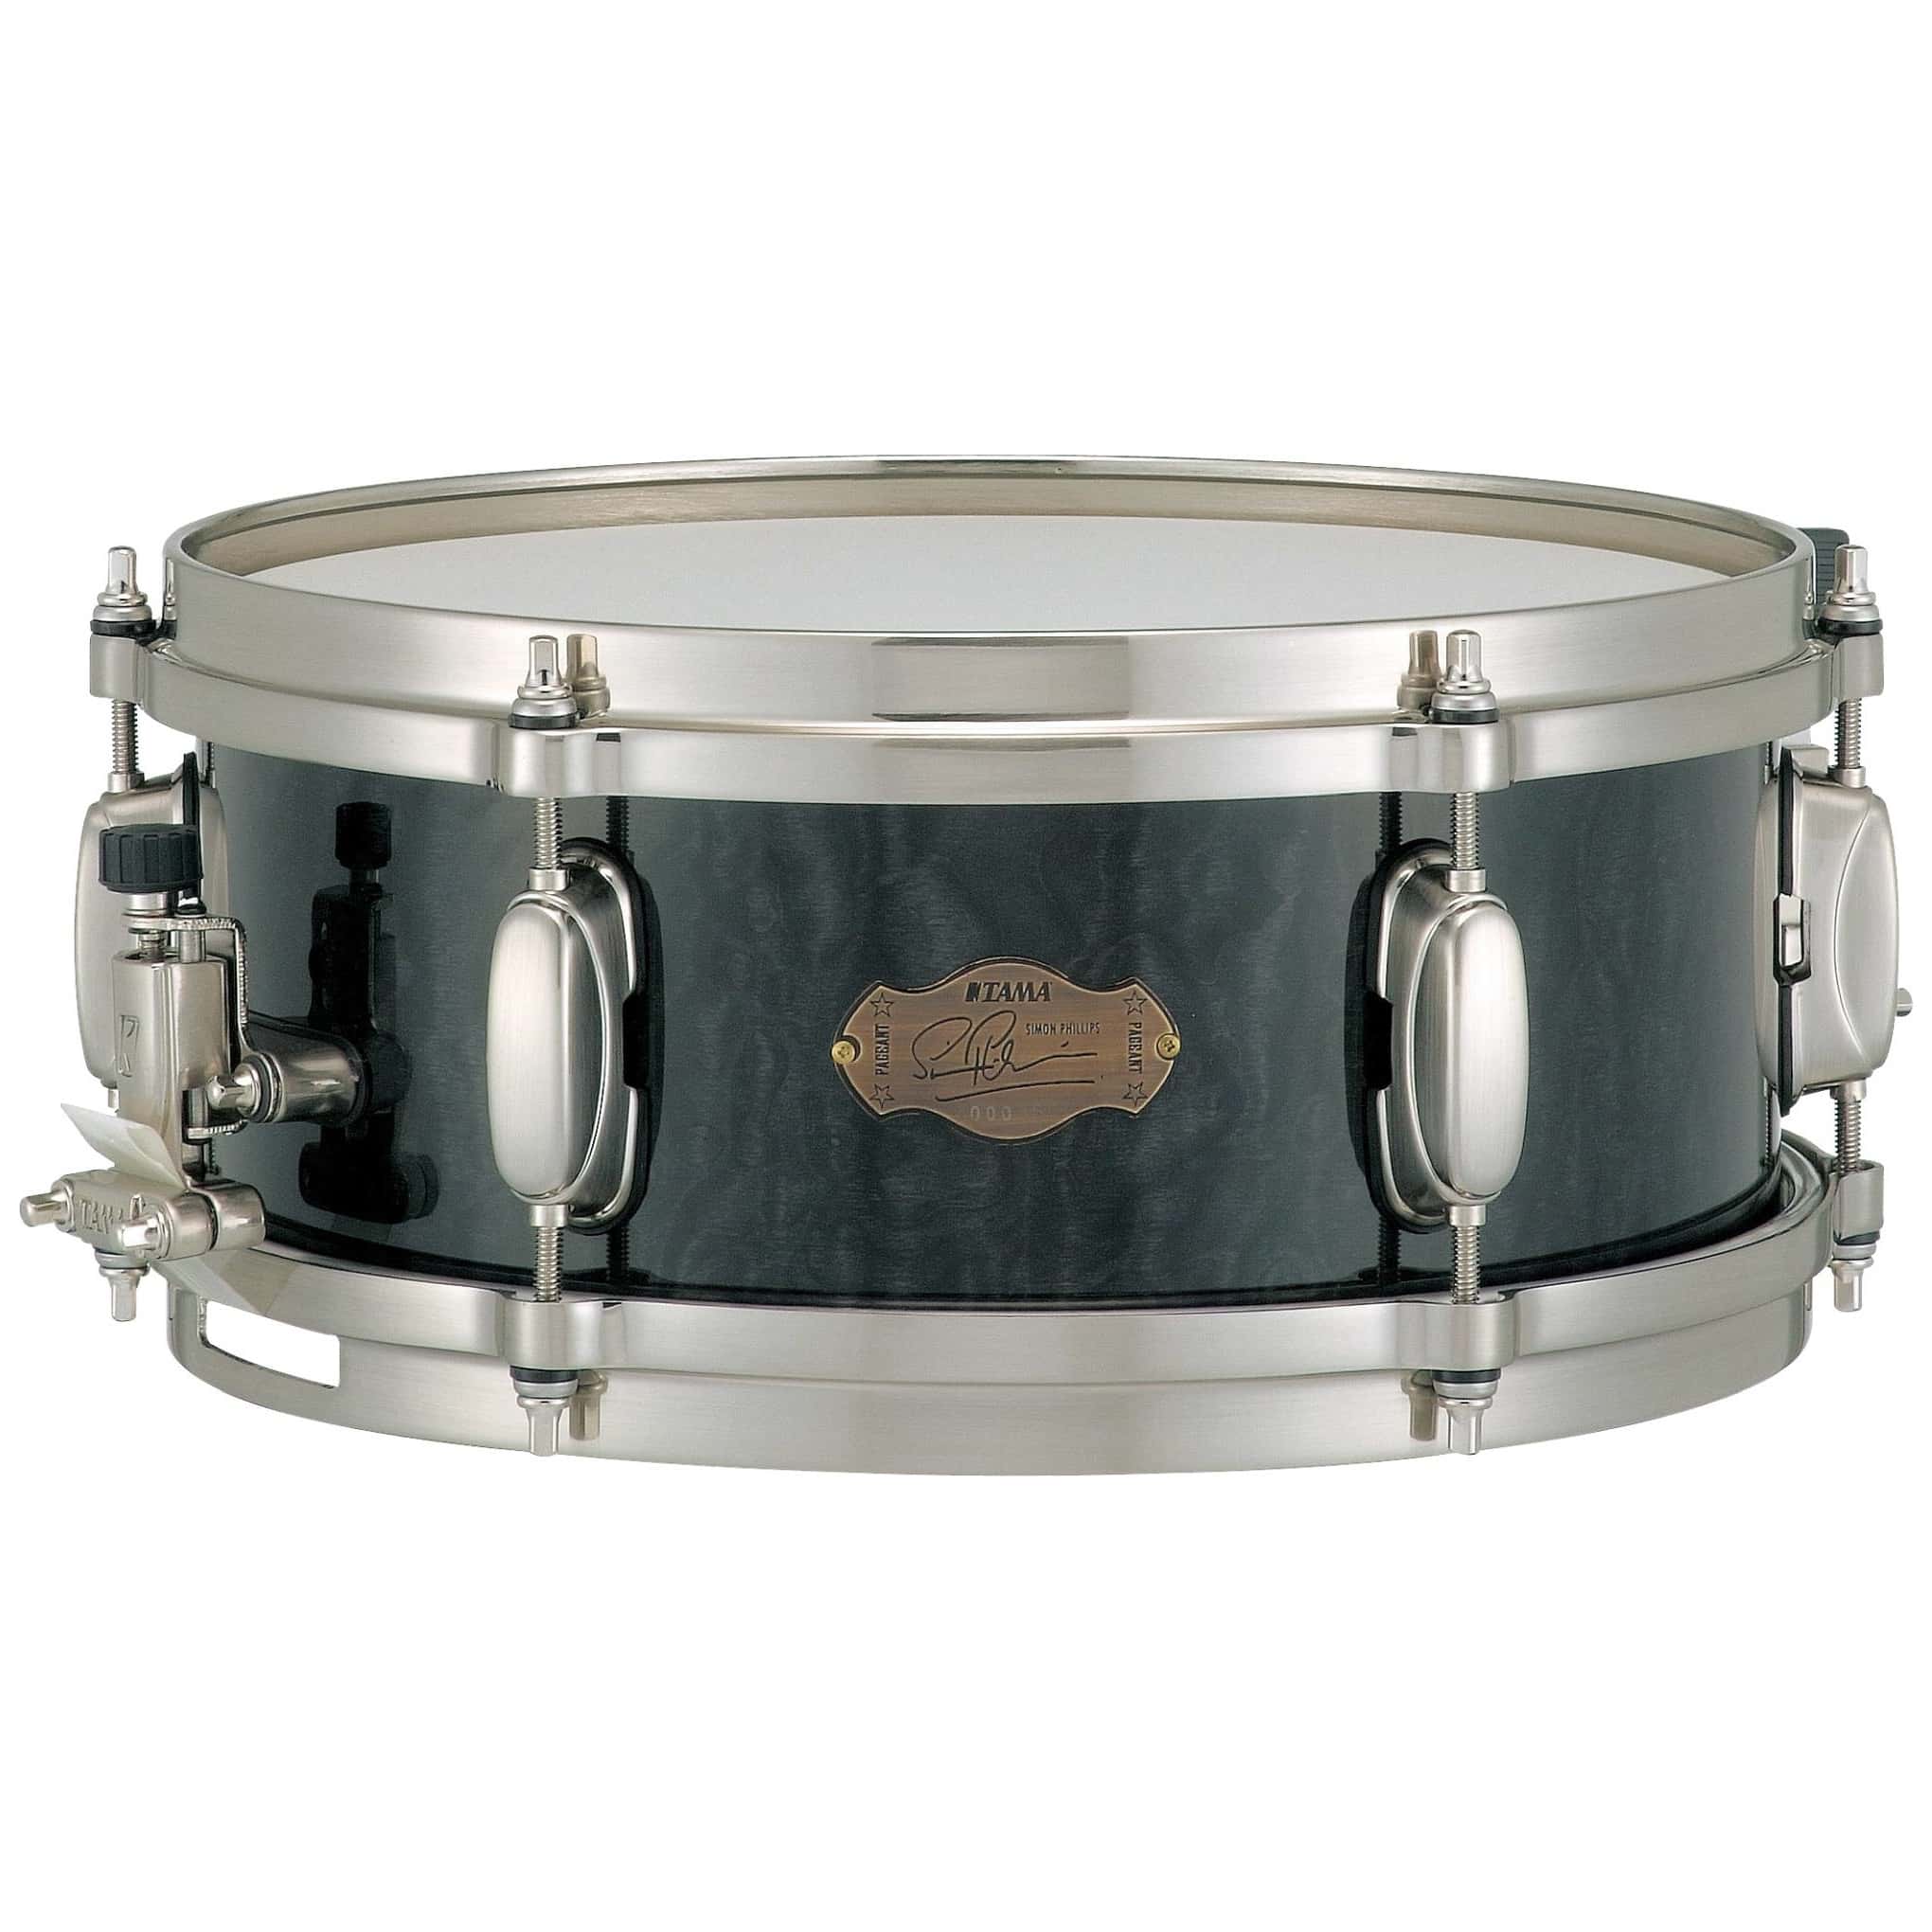 Tama SP125H 12" x 5" - "The Pageant" Simon Phillips Signature Snare Drum